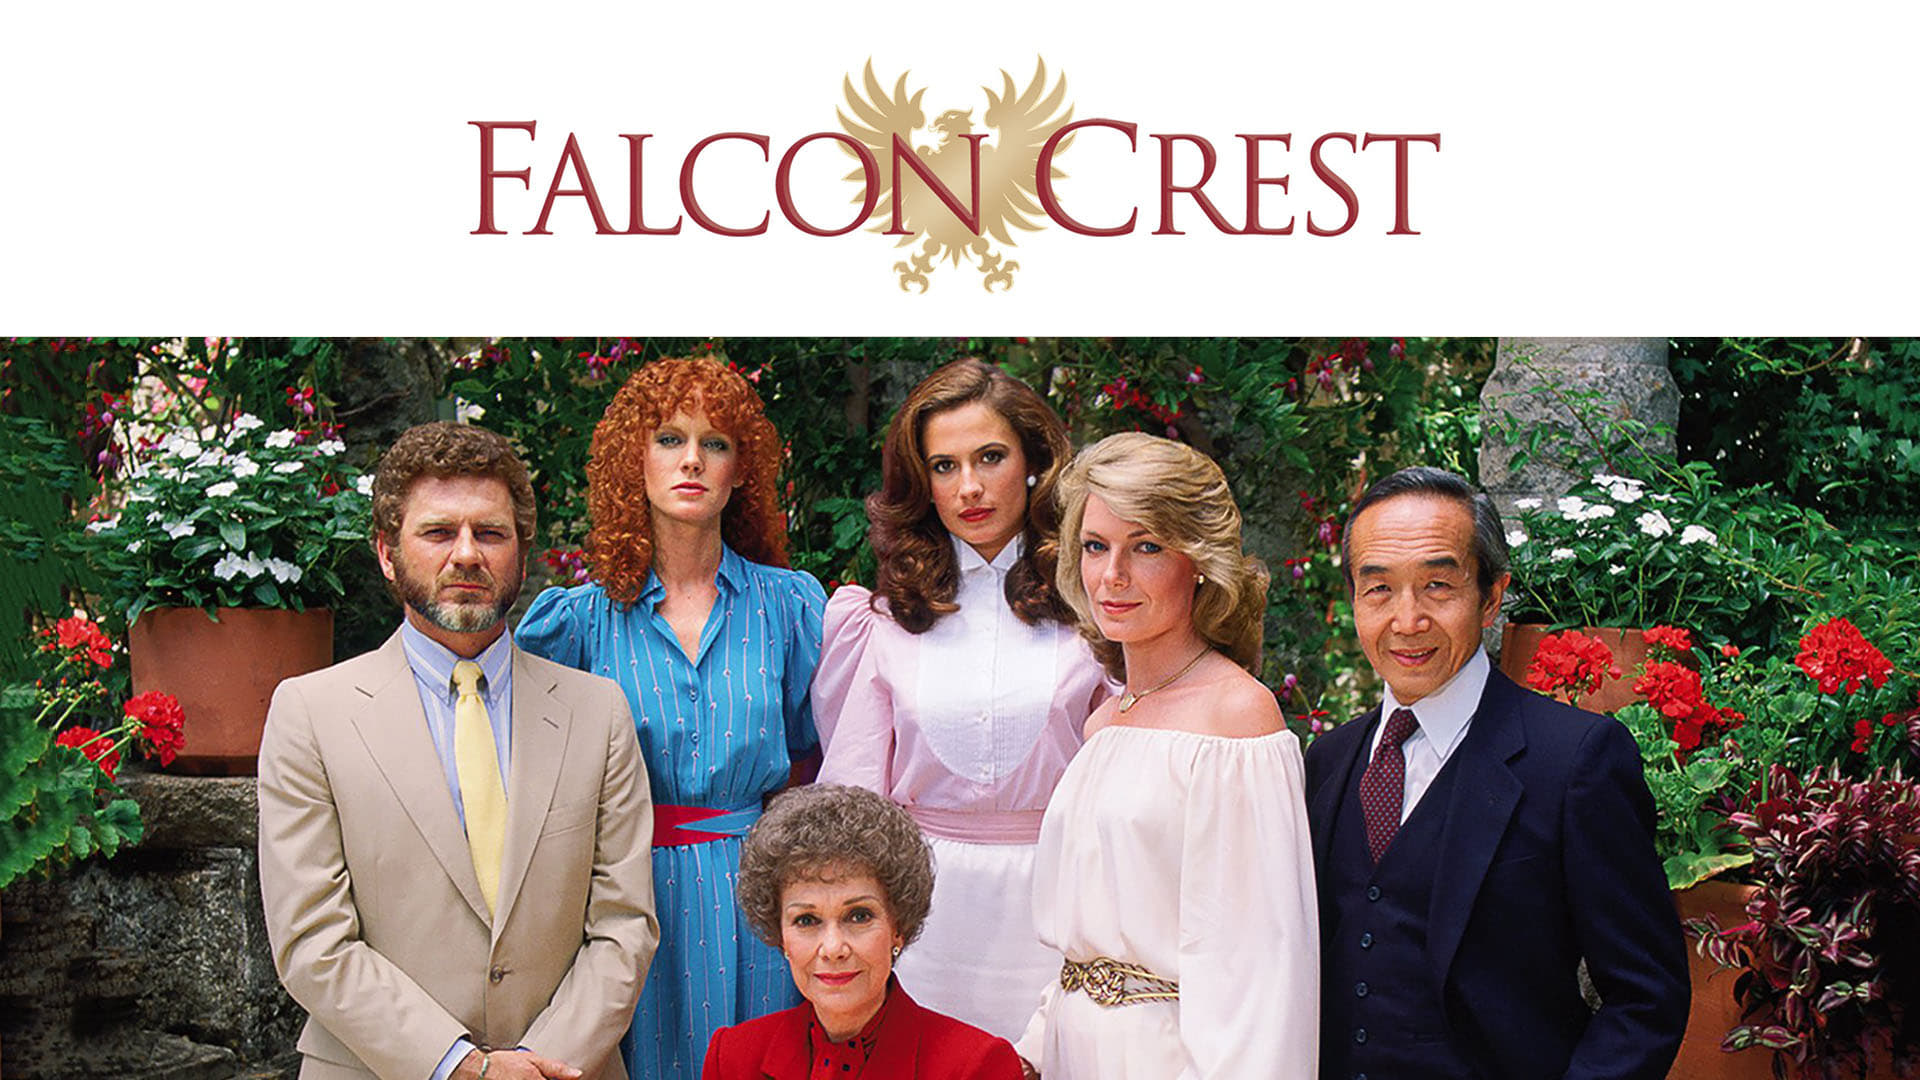 Falcon Crest - Season 9 Episode 1